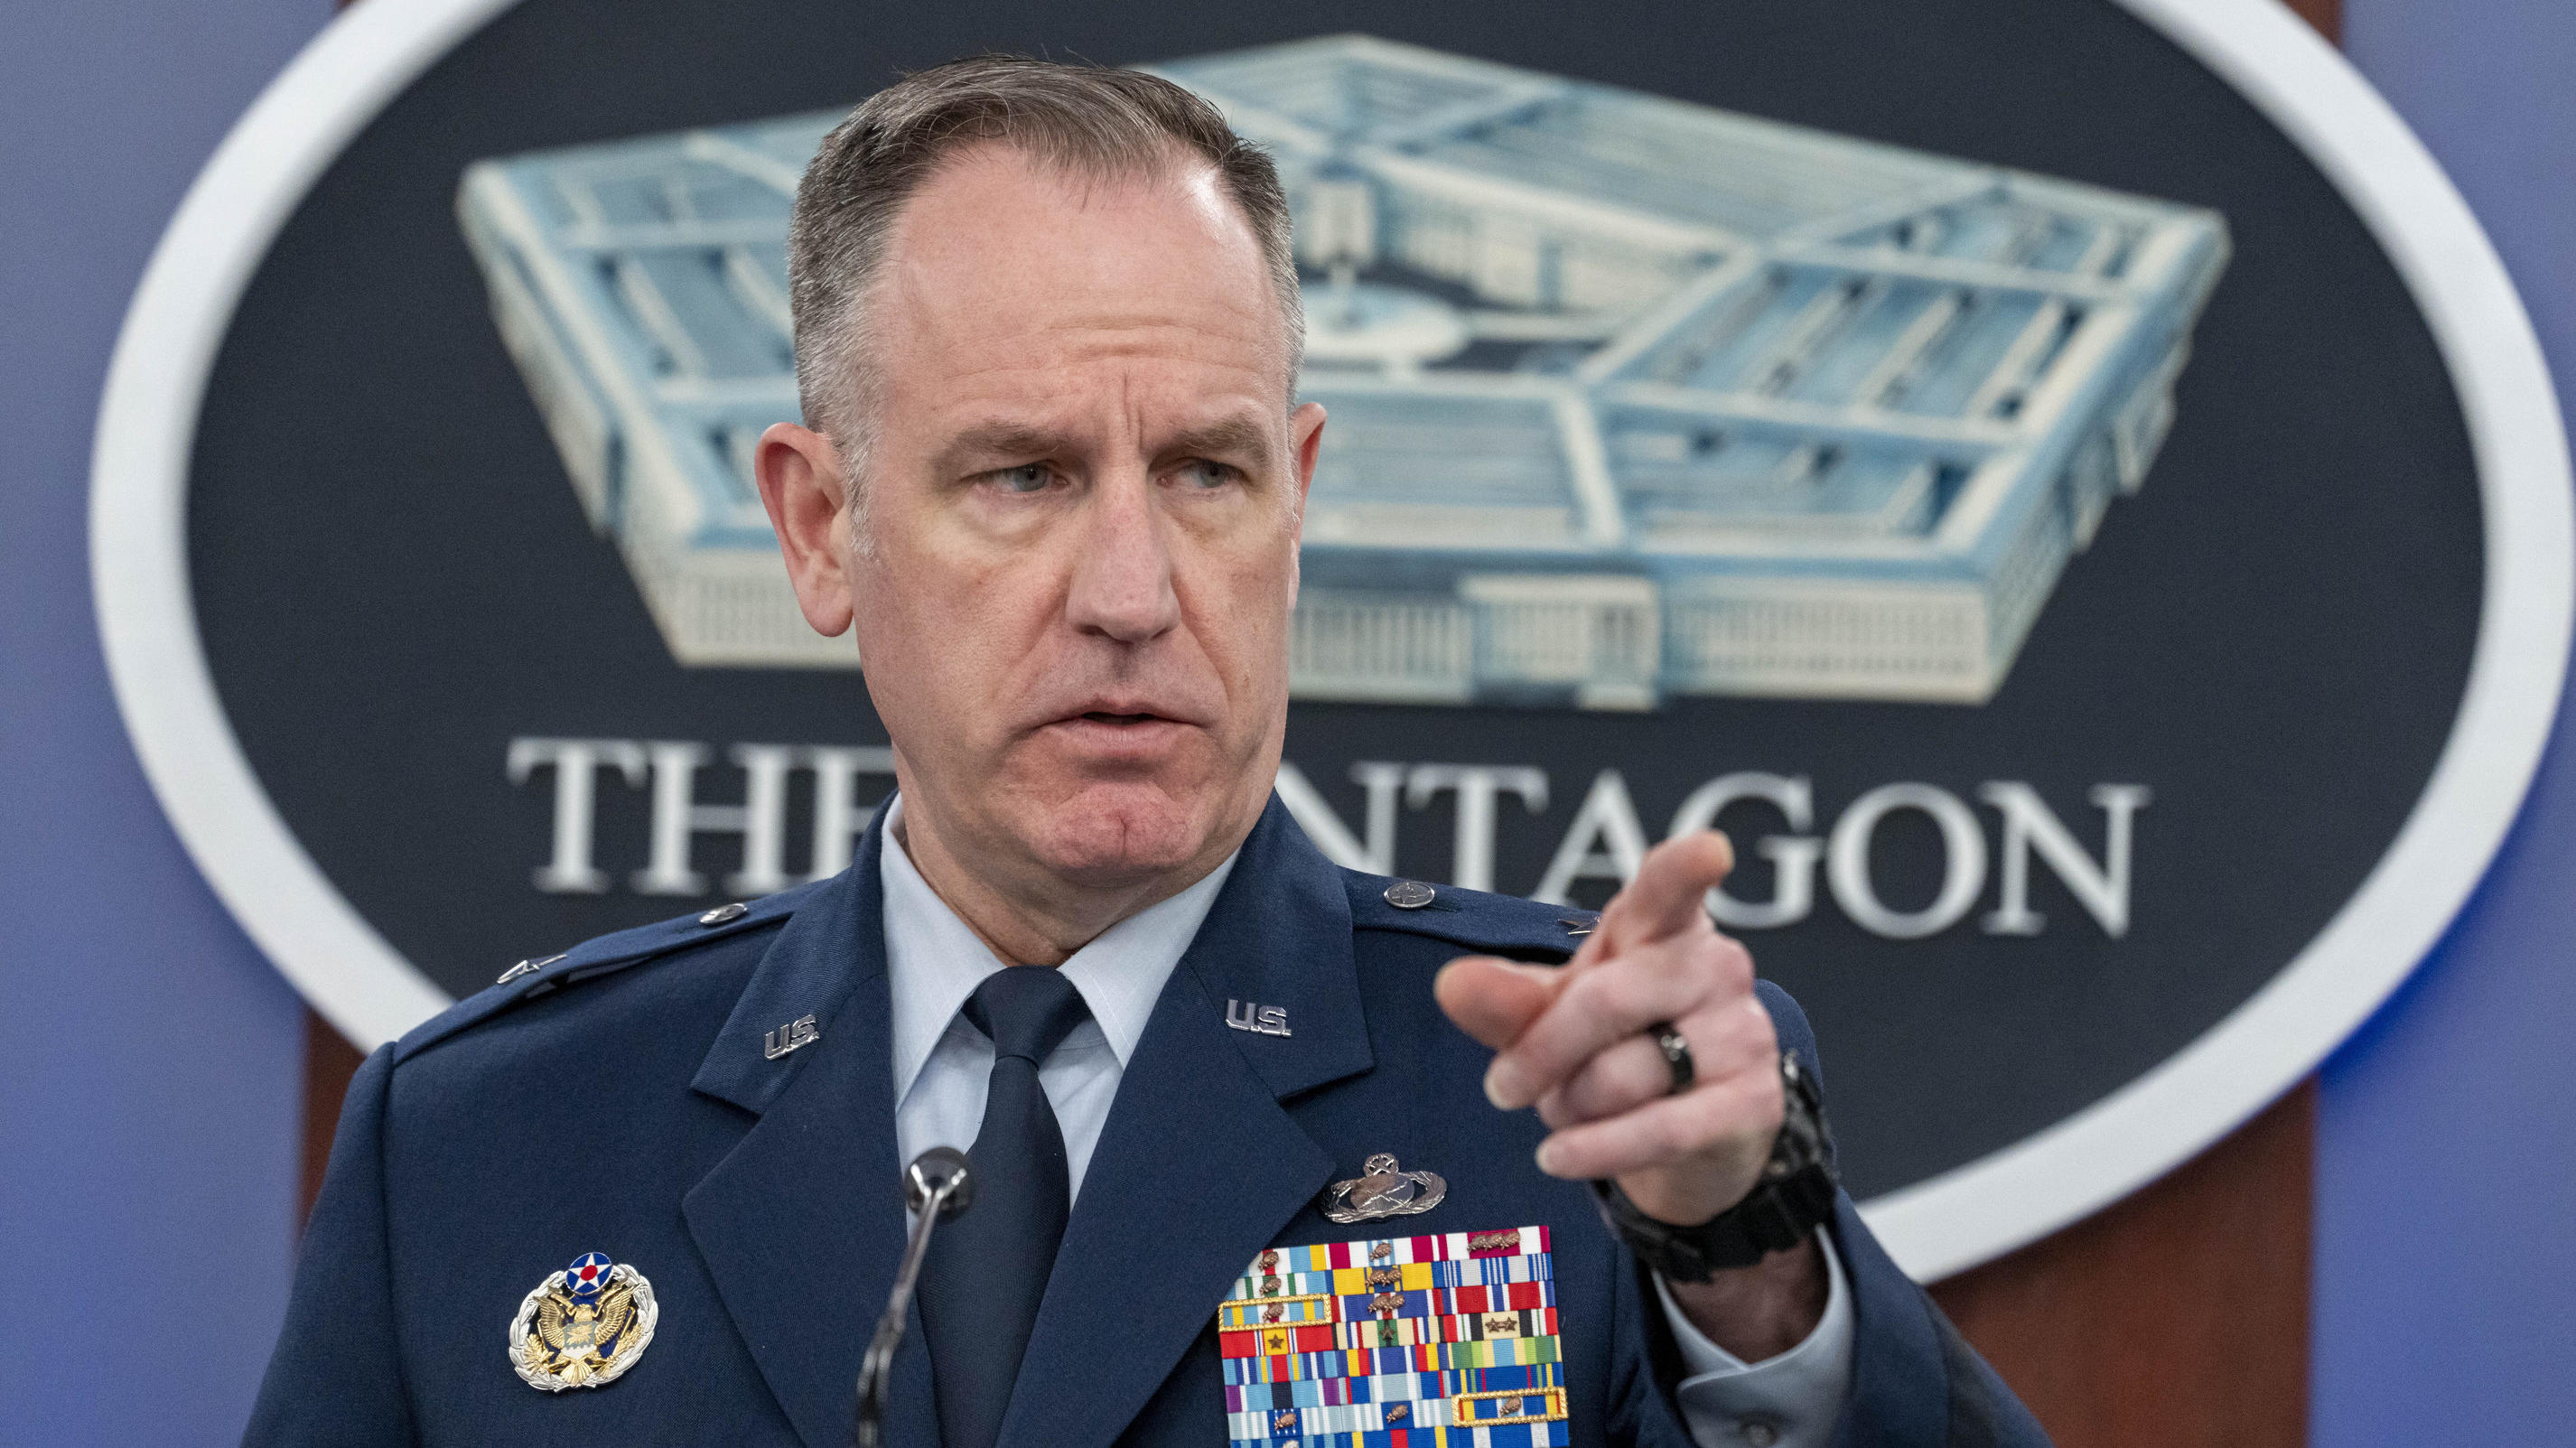 Pentagon spokesman U.S. Air Force Brig. Gen. Patrick Ryder speaks during a media briefing at the Pentagon, Tuesday, Jan. 24, 2023, in Washington. (AP Photo/Alex Brandon)